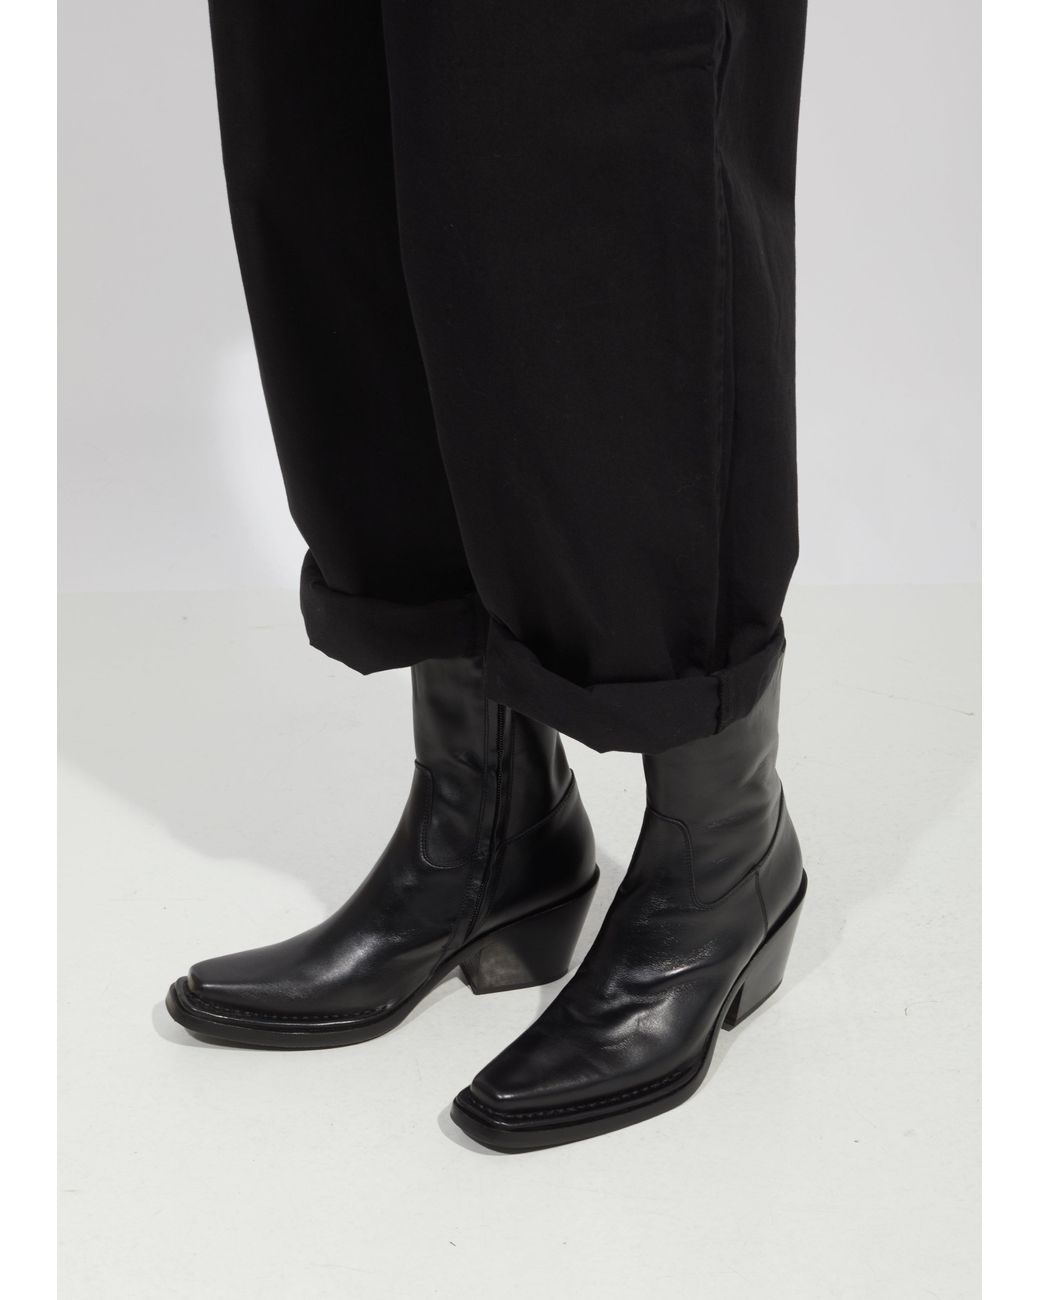 Acne Studios Bruna Boots in Black | Lyst Australia